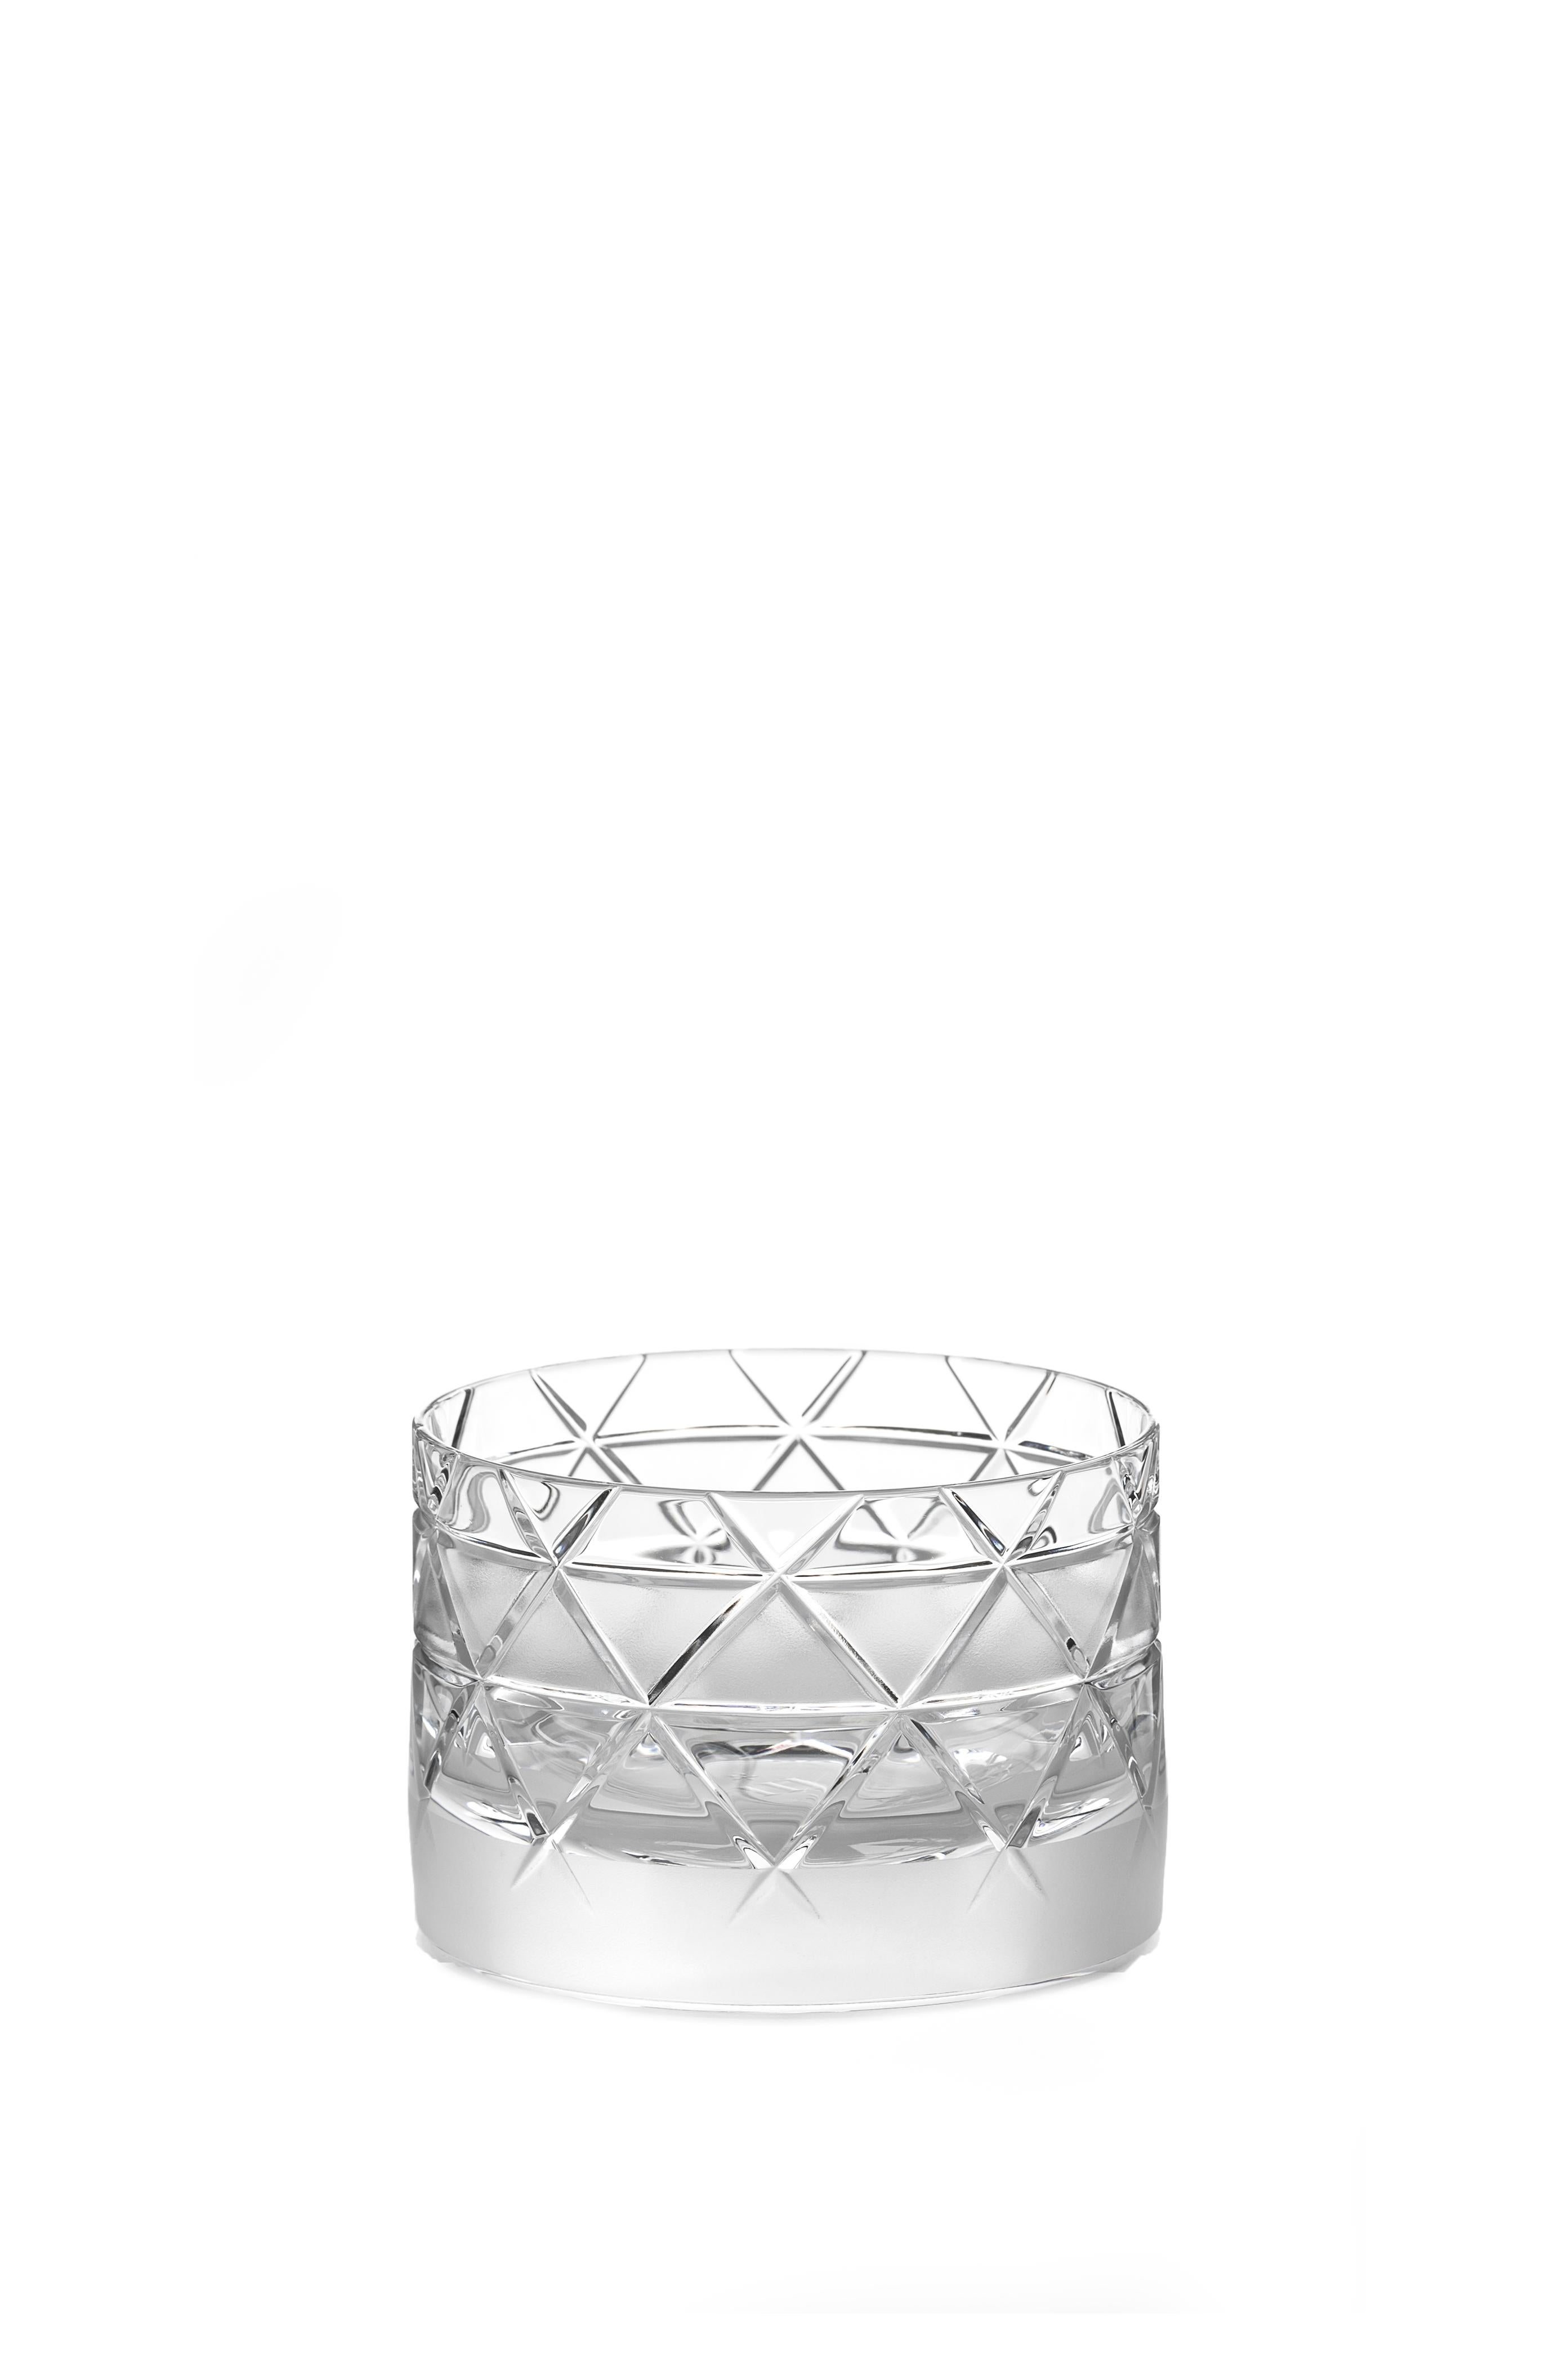 Contemporary Scholten & Baijings Handmade Irish Crystal Low Glass 'Elements' Series Cut No II For Sale